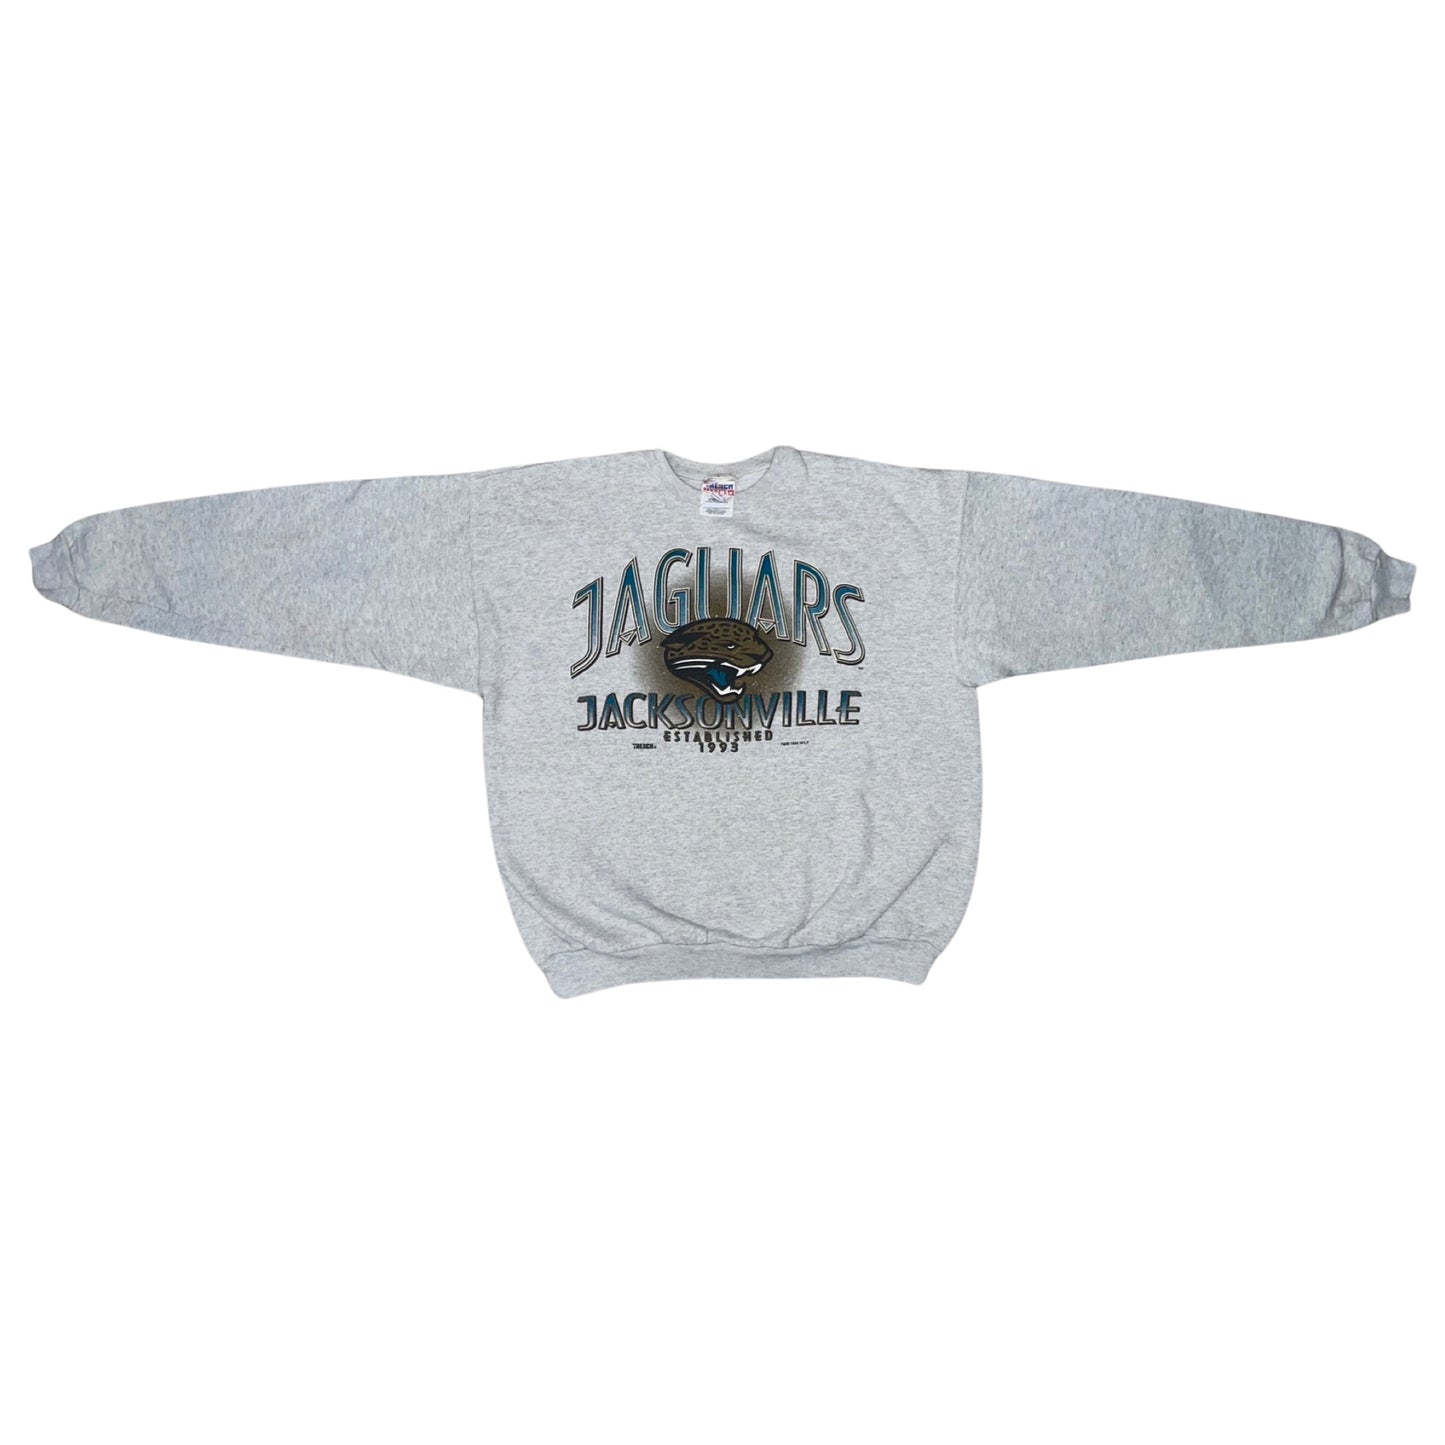 Vintage Jacksonville Jaguars 1994 sweatshirt size M/L